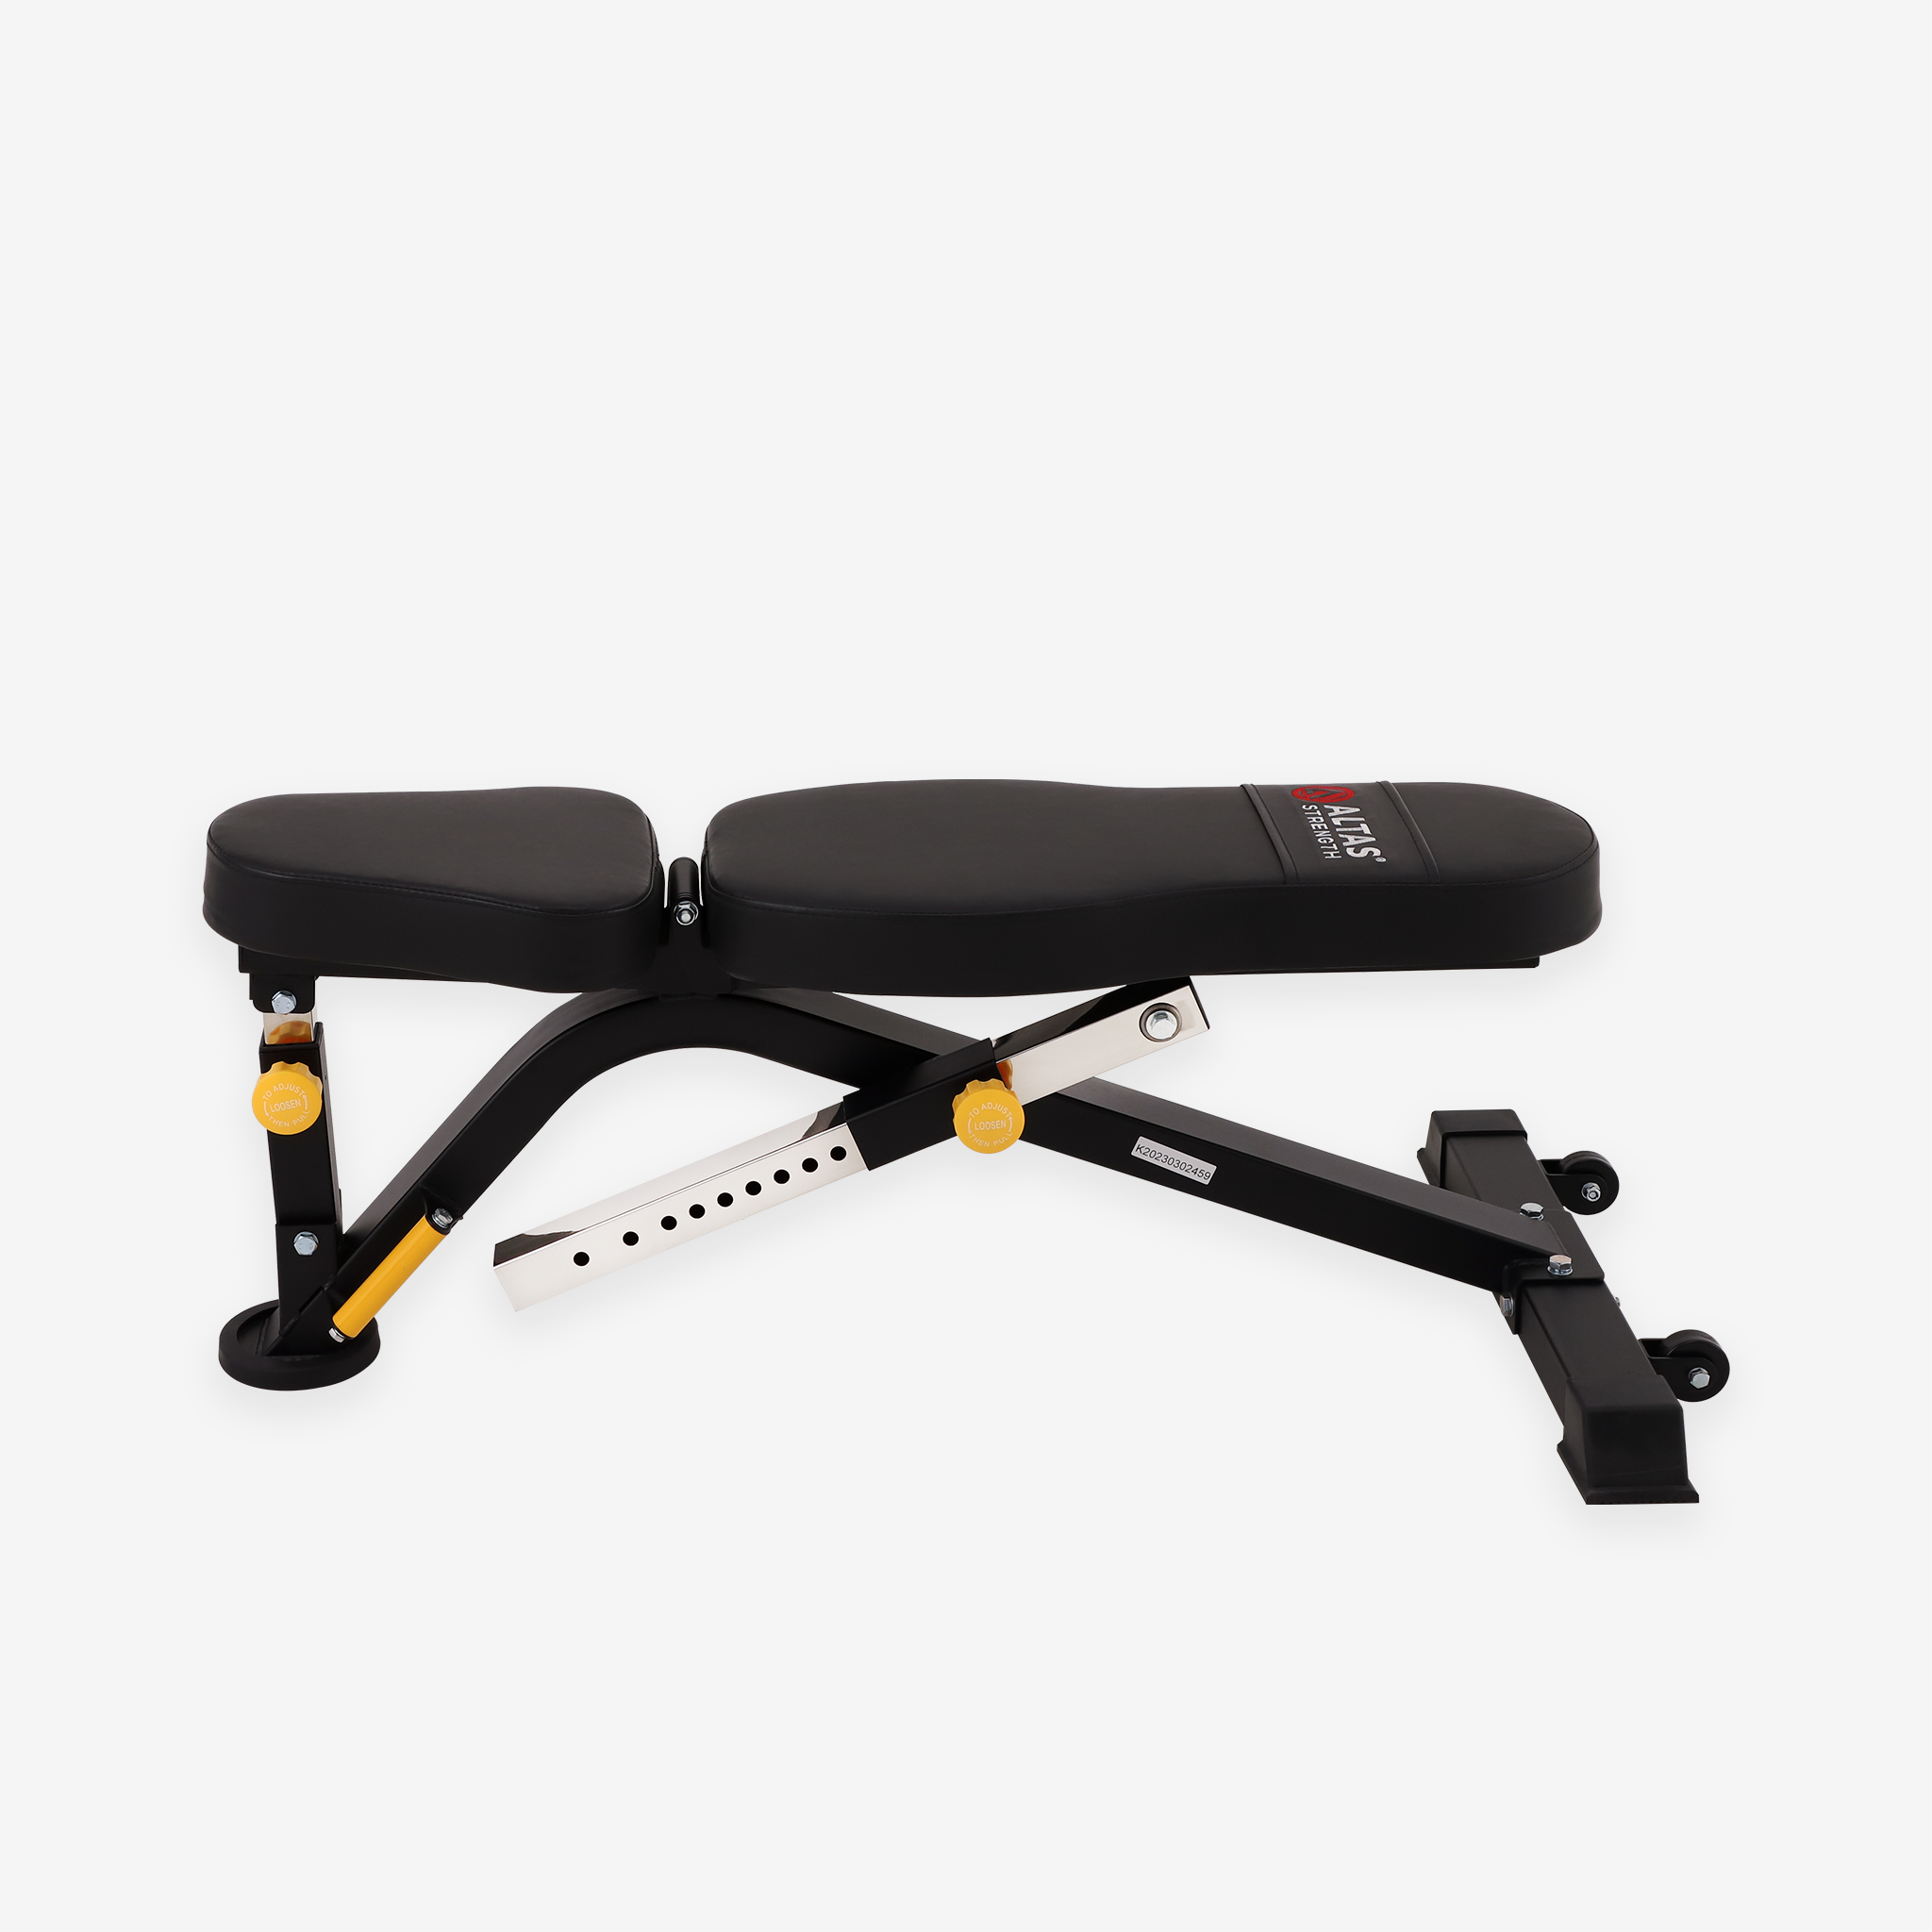 Altas Strength Home Gym Workout Adjustable Bench AL-4006